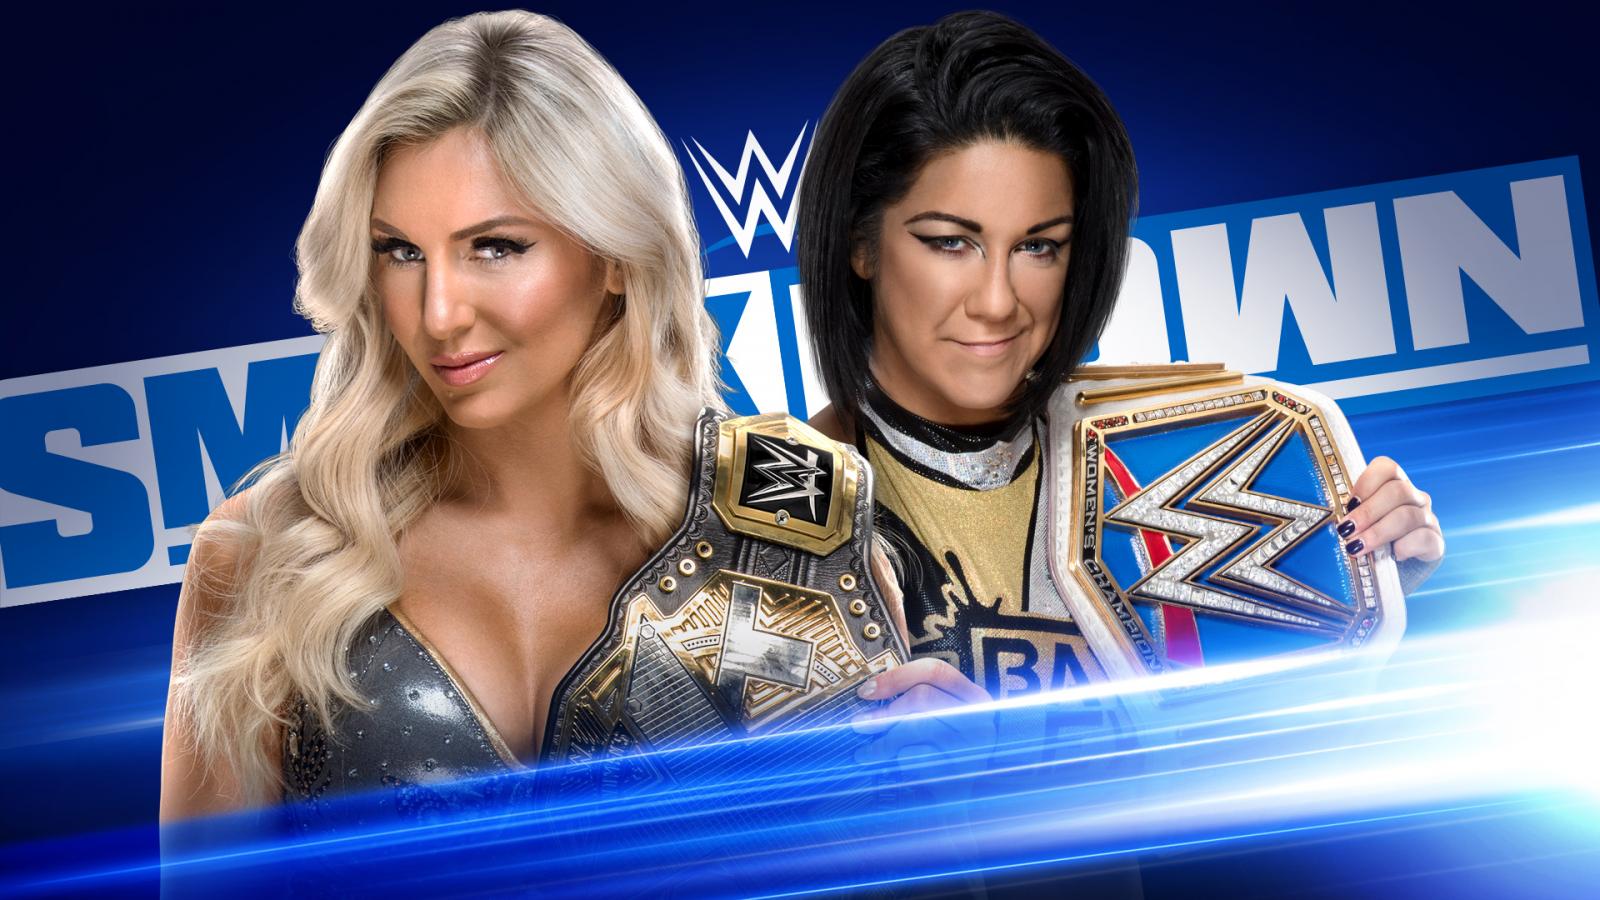 NXT Women's Champion Charlotte Flair vs SmackDown Women's Champion Bayley